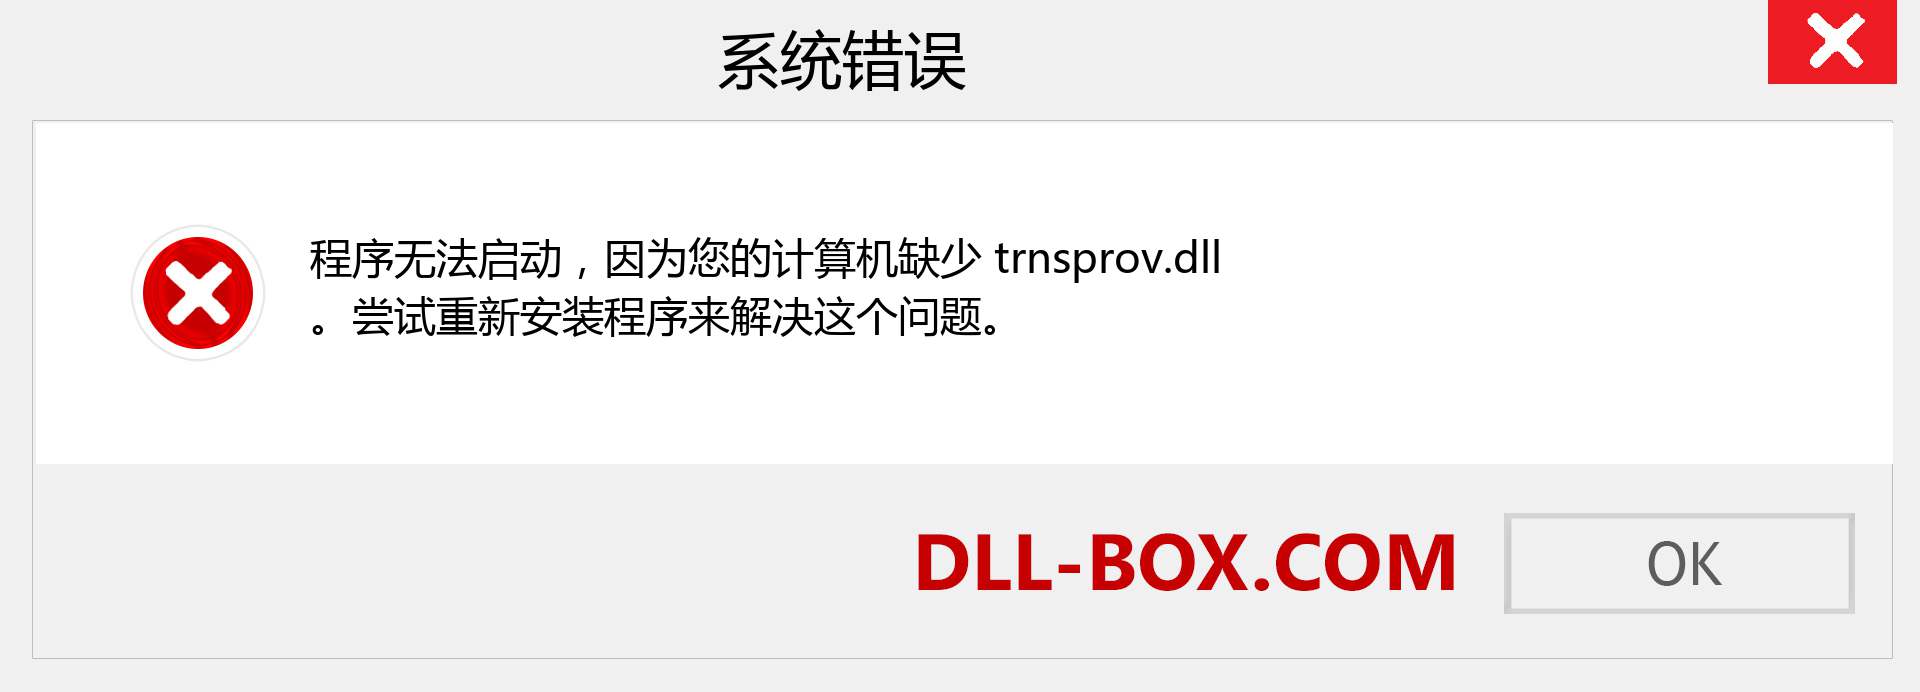 trnsprov.dll 文件丢失？。 适用于 Windows 7、8、10 的下载 - 修复 Windows、照片、图像上的 trnsprov dll 丢失错误